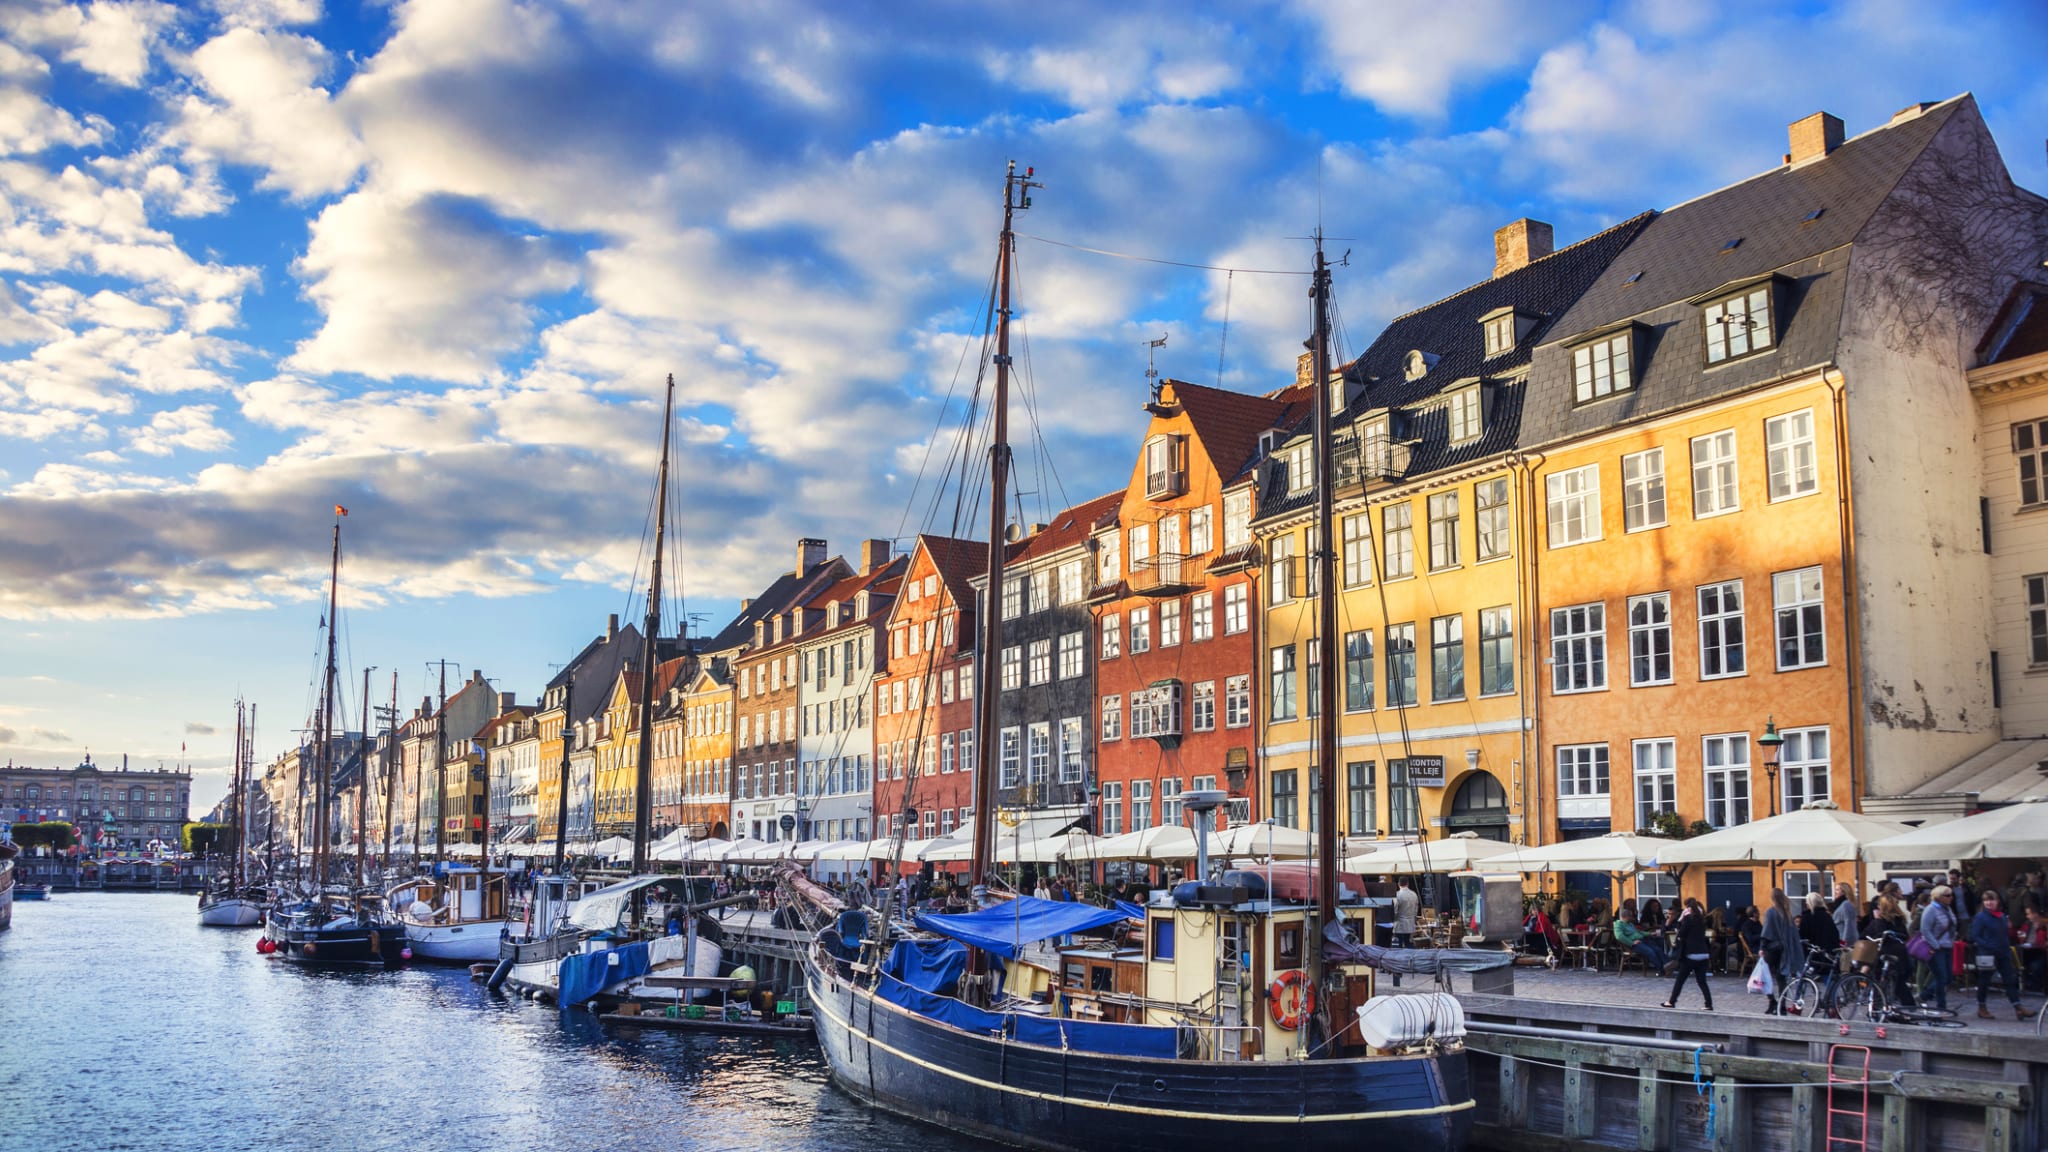 Farbenfrohe traditionelle Häuser in Kopenhagen, Altstadt von Nyhavn © iStock.com/AleksandarGeorgiev